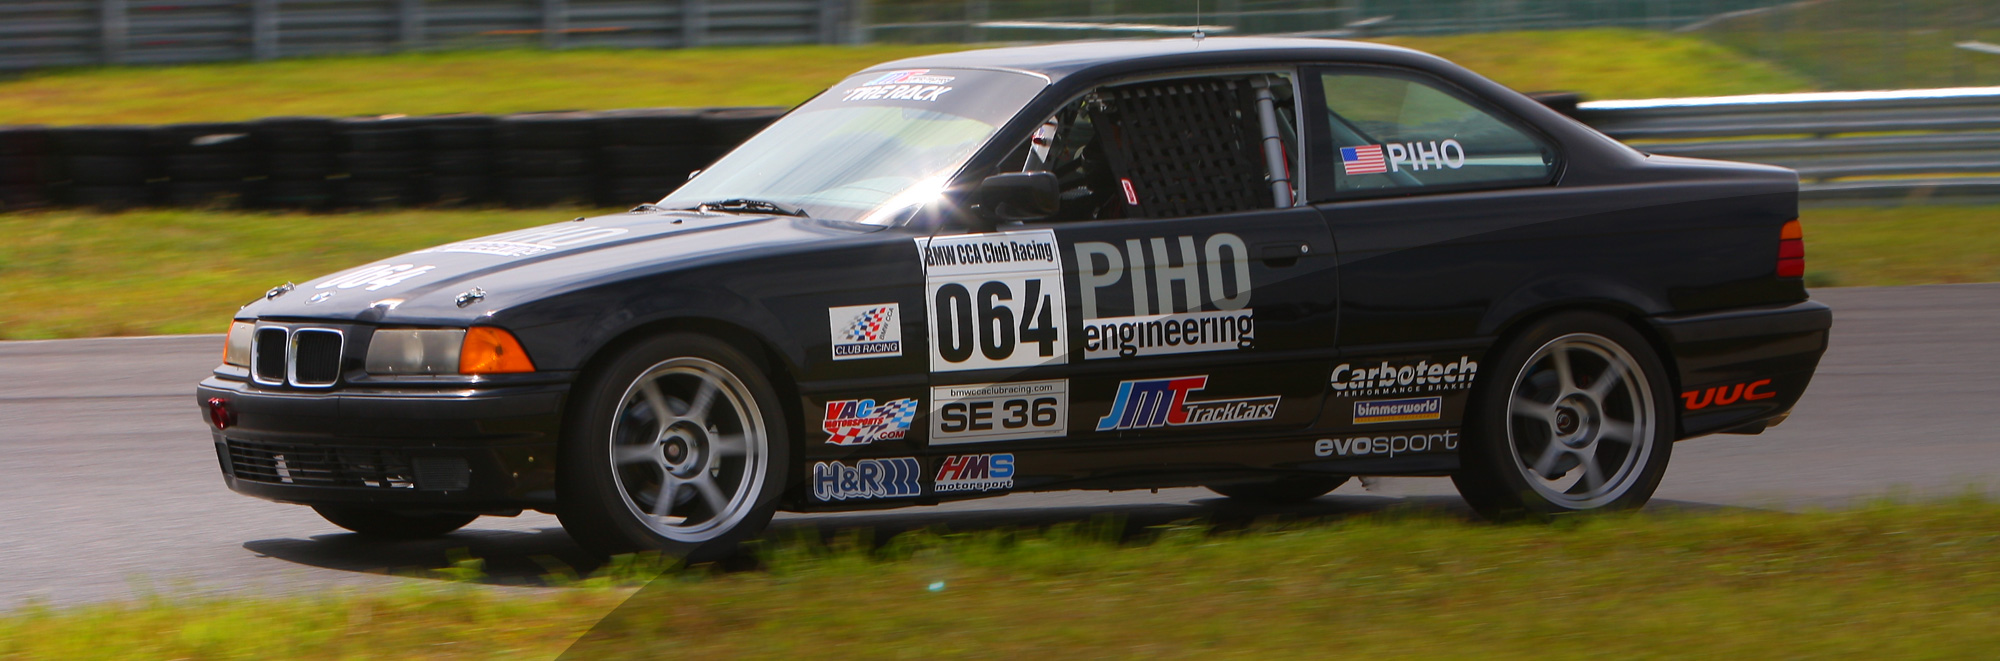 Piho Motorsports